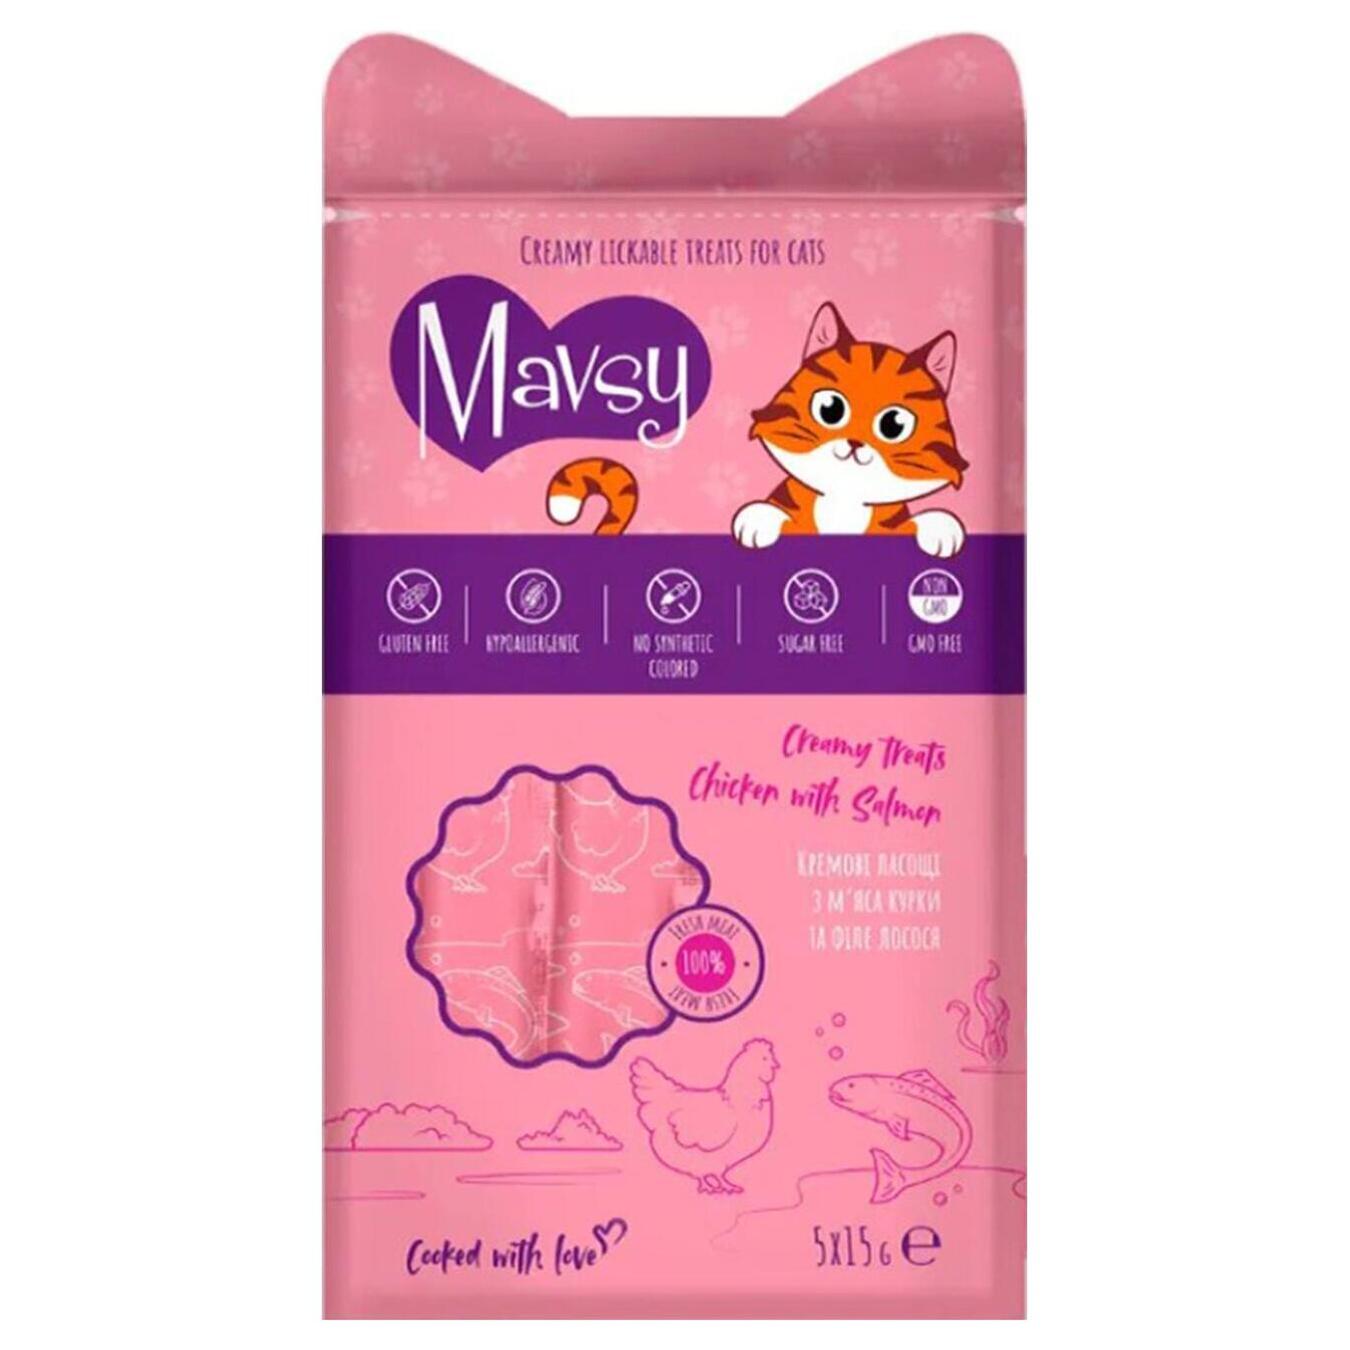 Mavsy cream treats for cats with salmon and chicken 5x15g